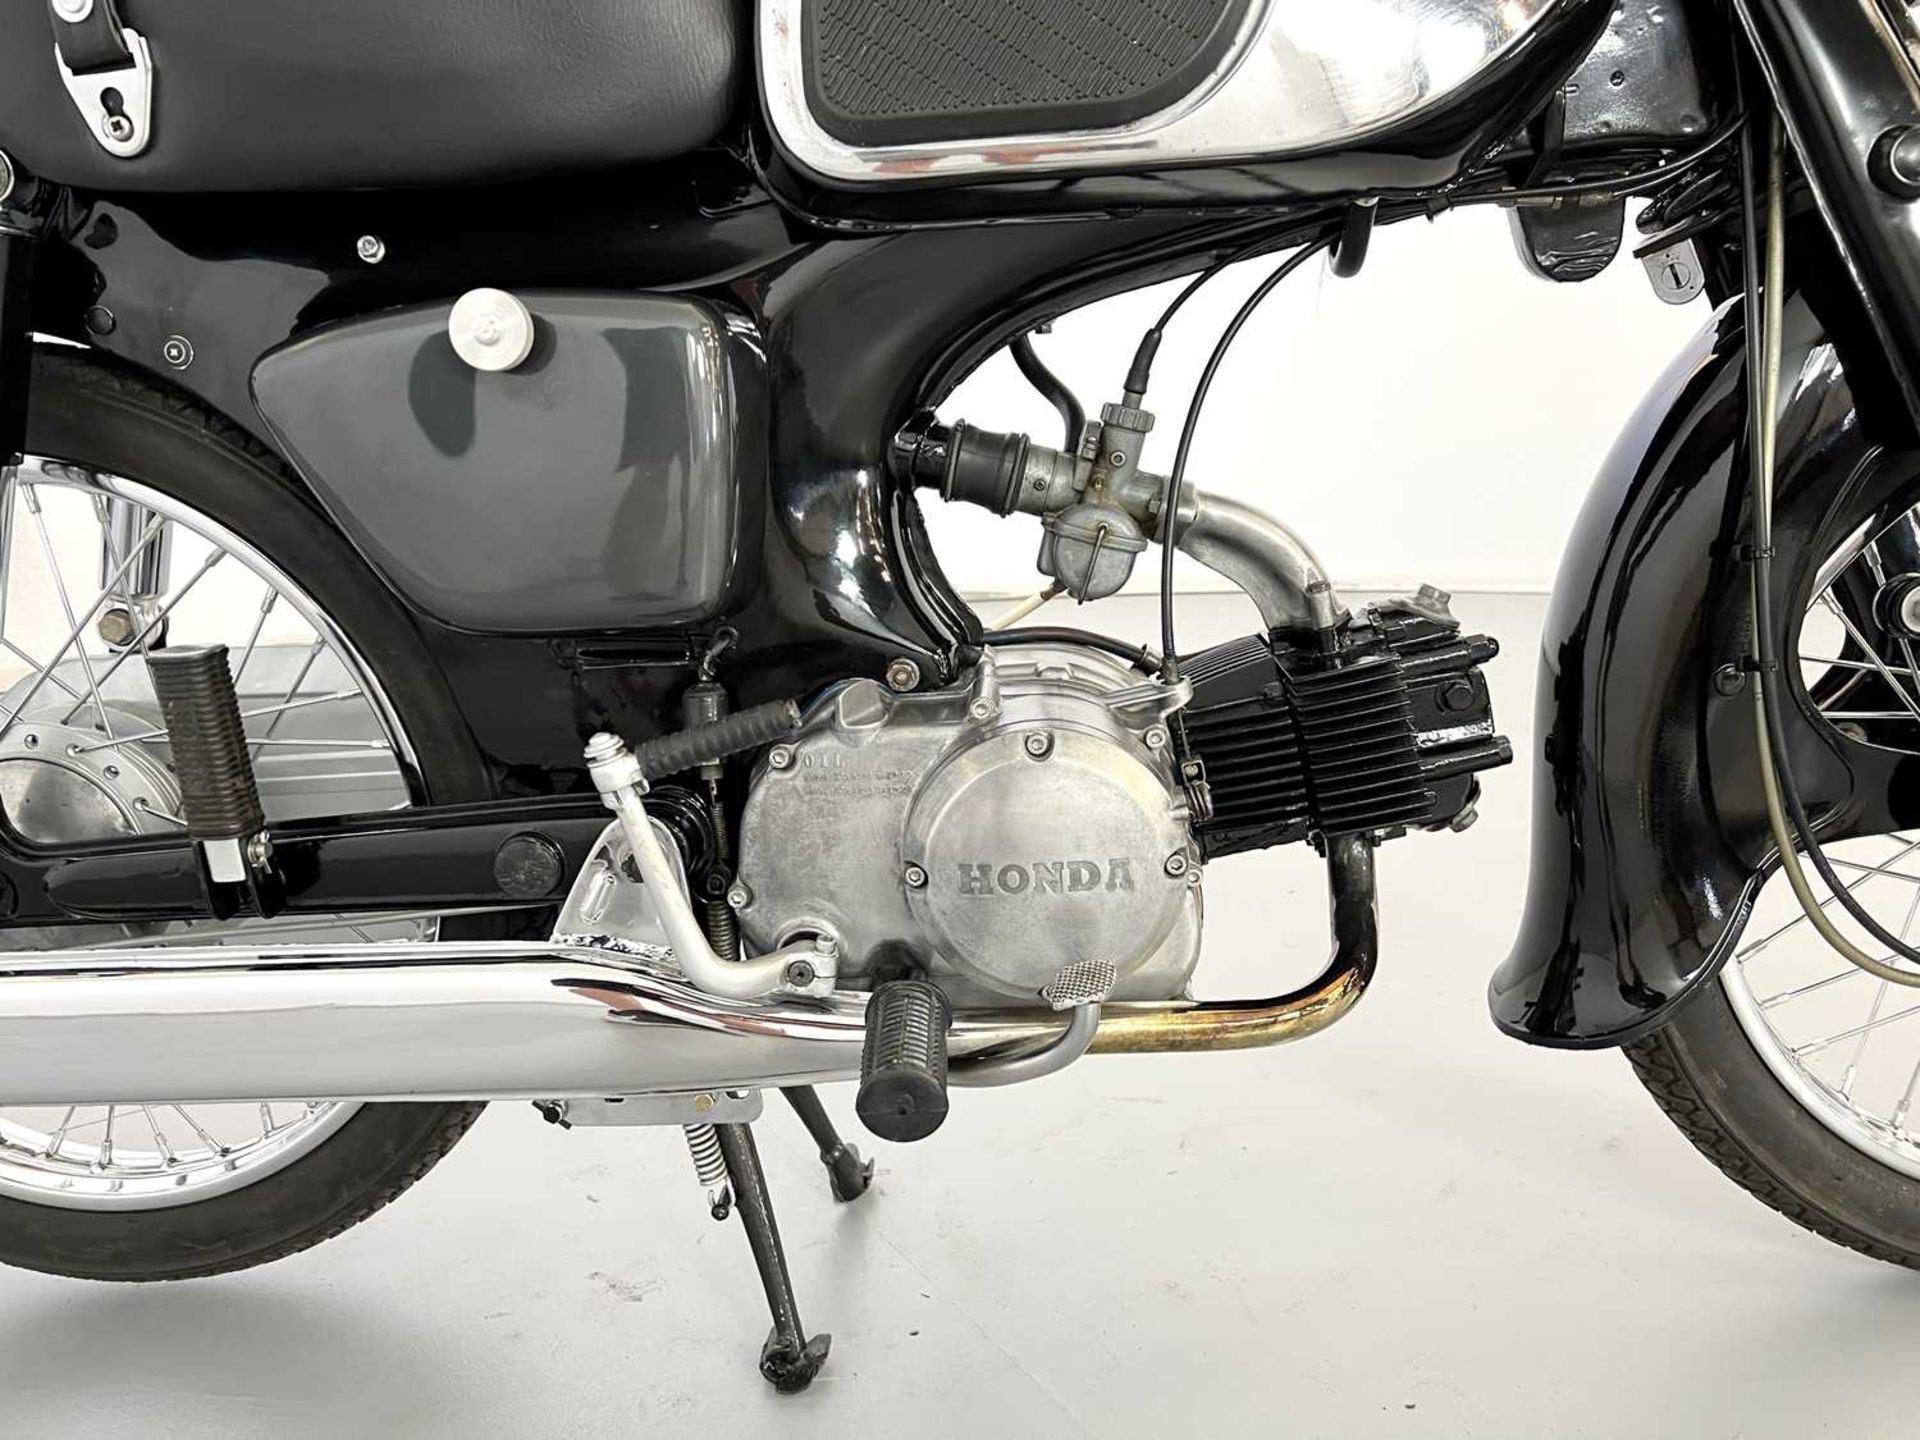 1965 Honda C200 - Image 10 of 14